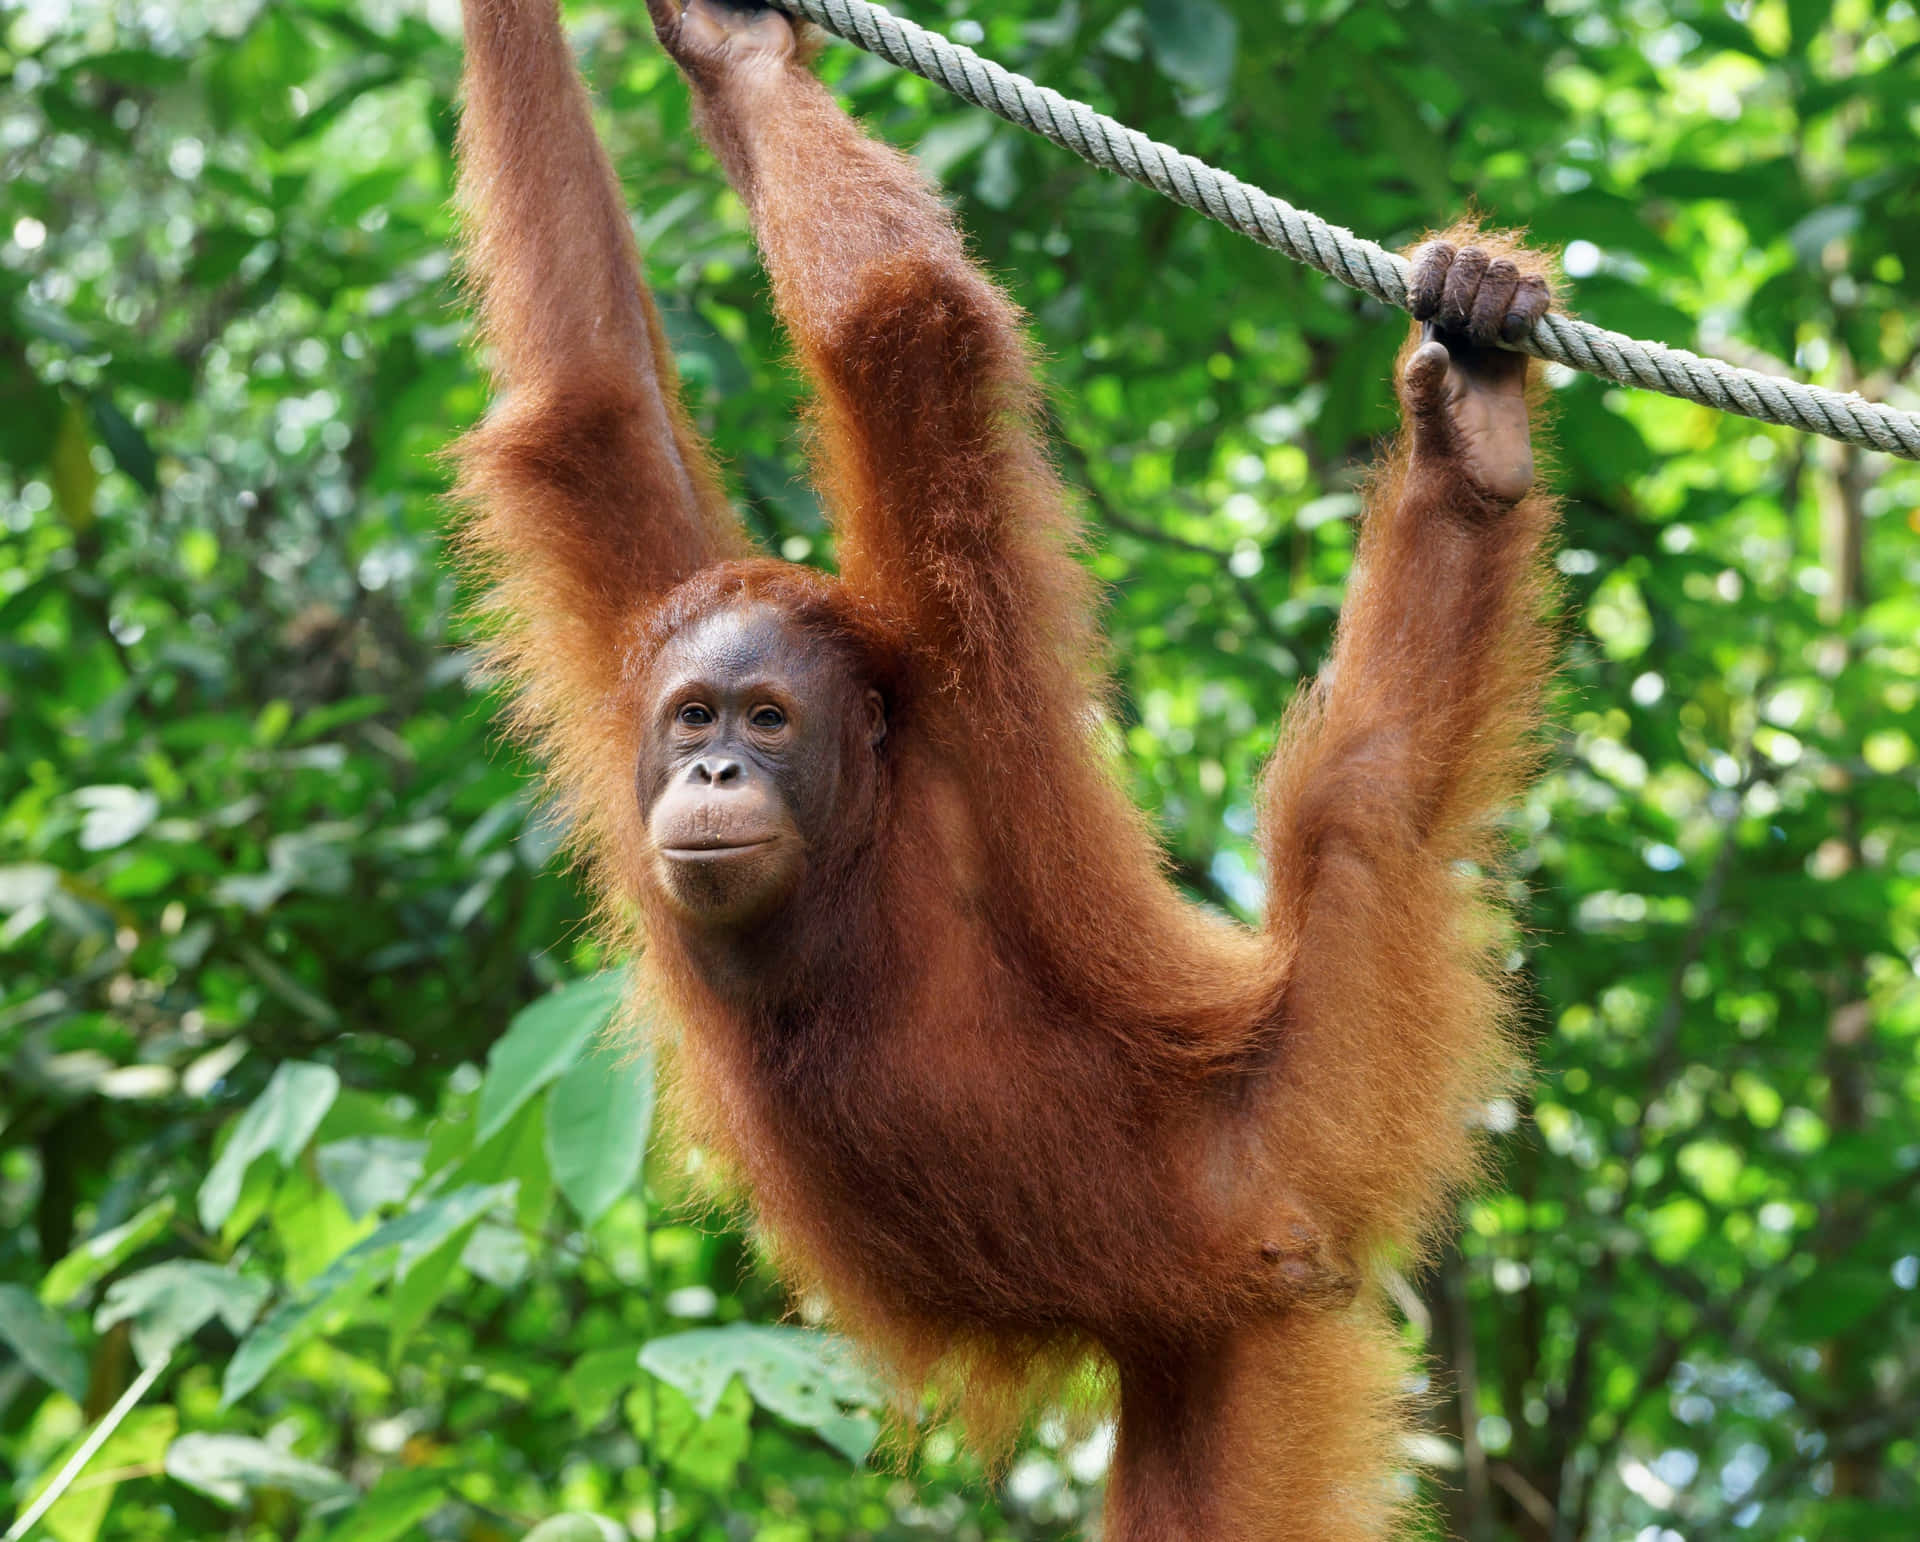 An Orangutan with a friendly smile